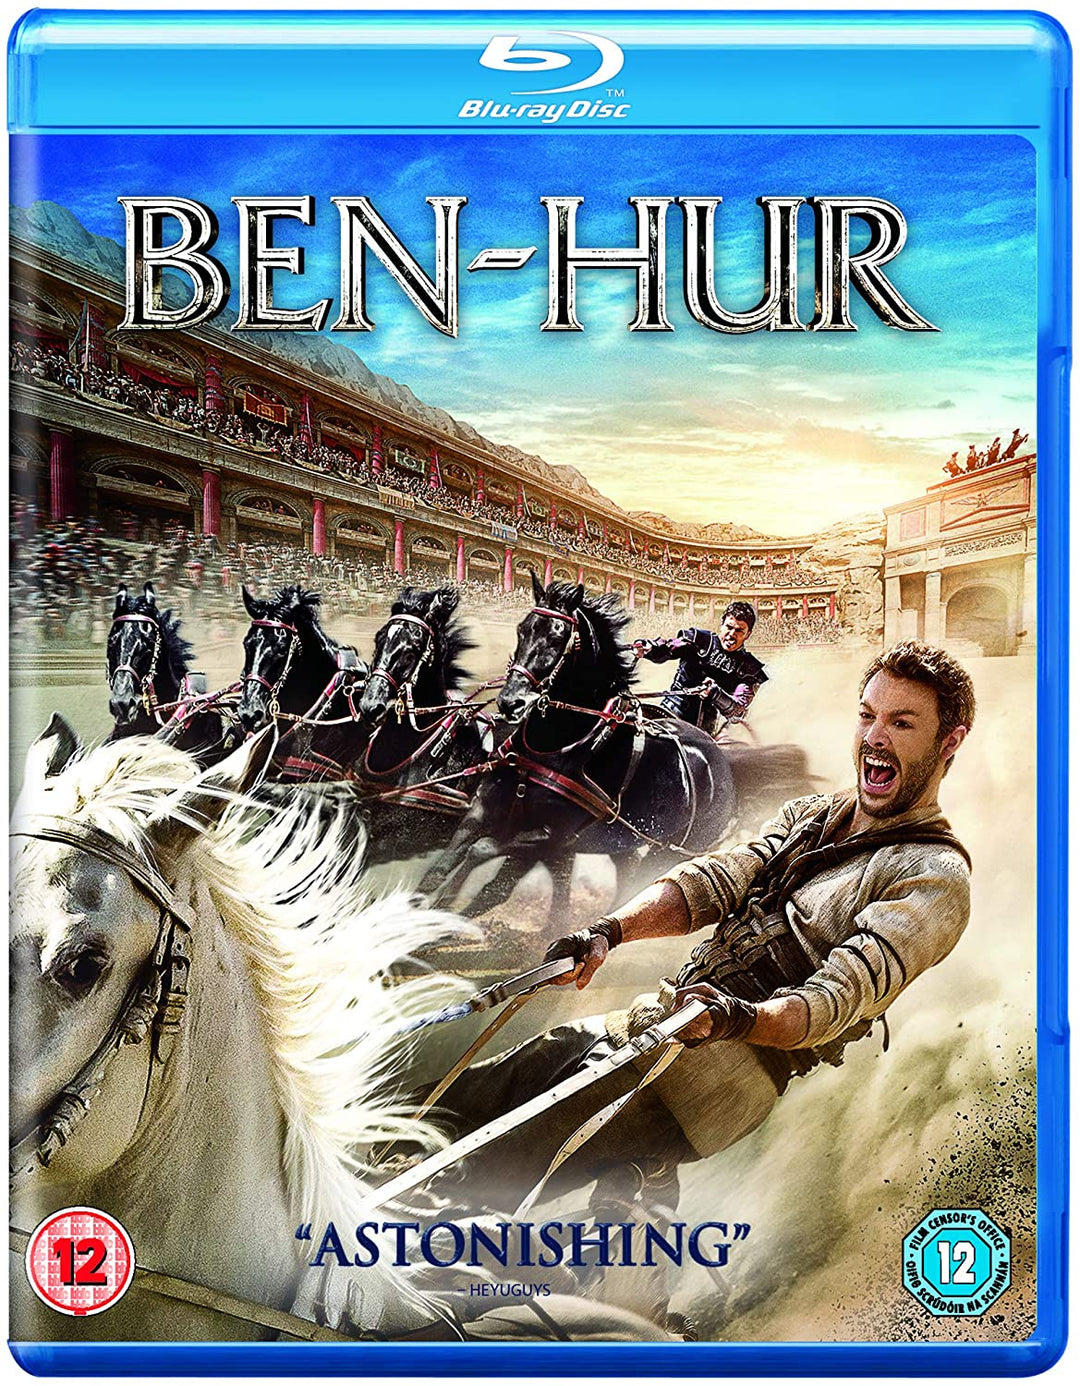 Ben Hur [Blu-ray] [2017] [Region Free]